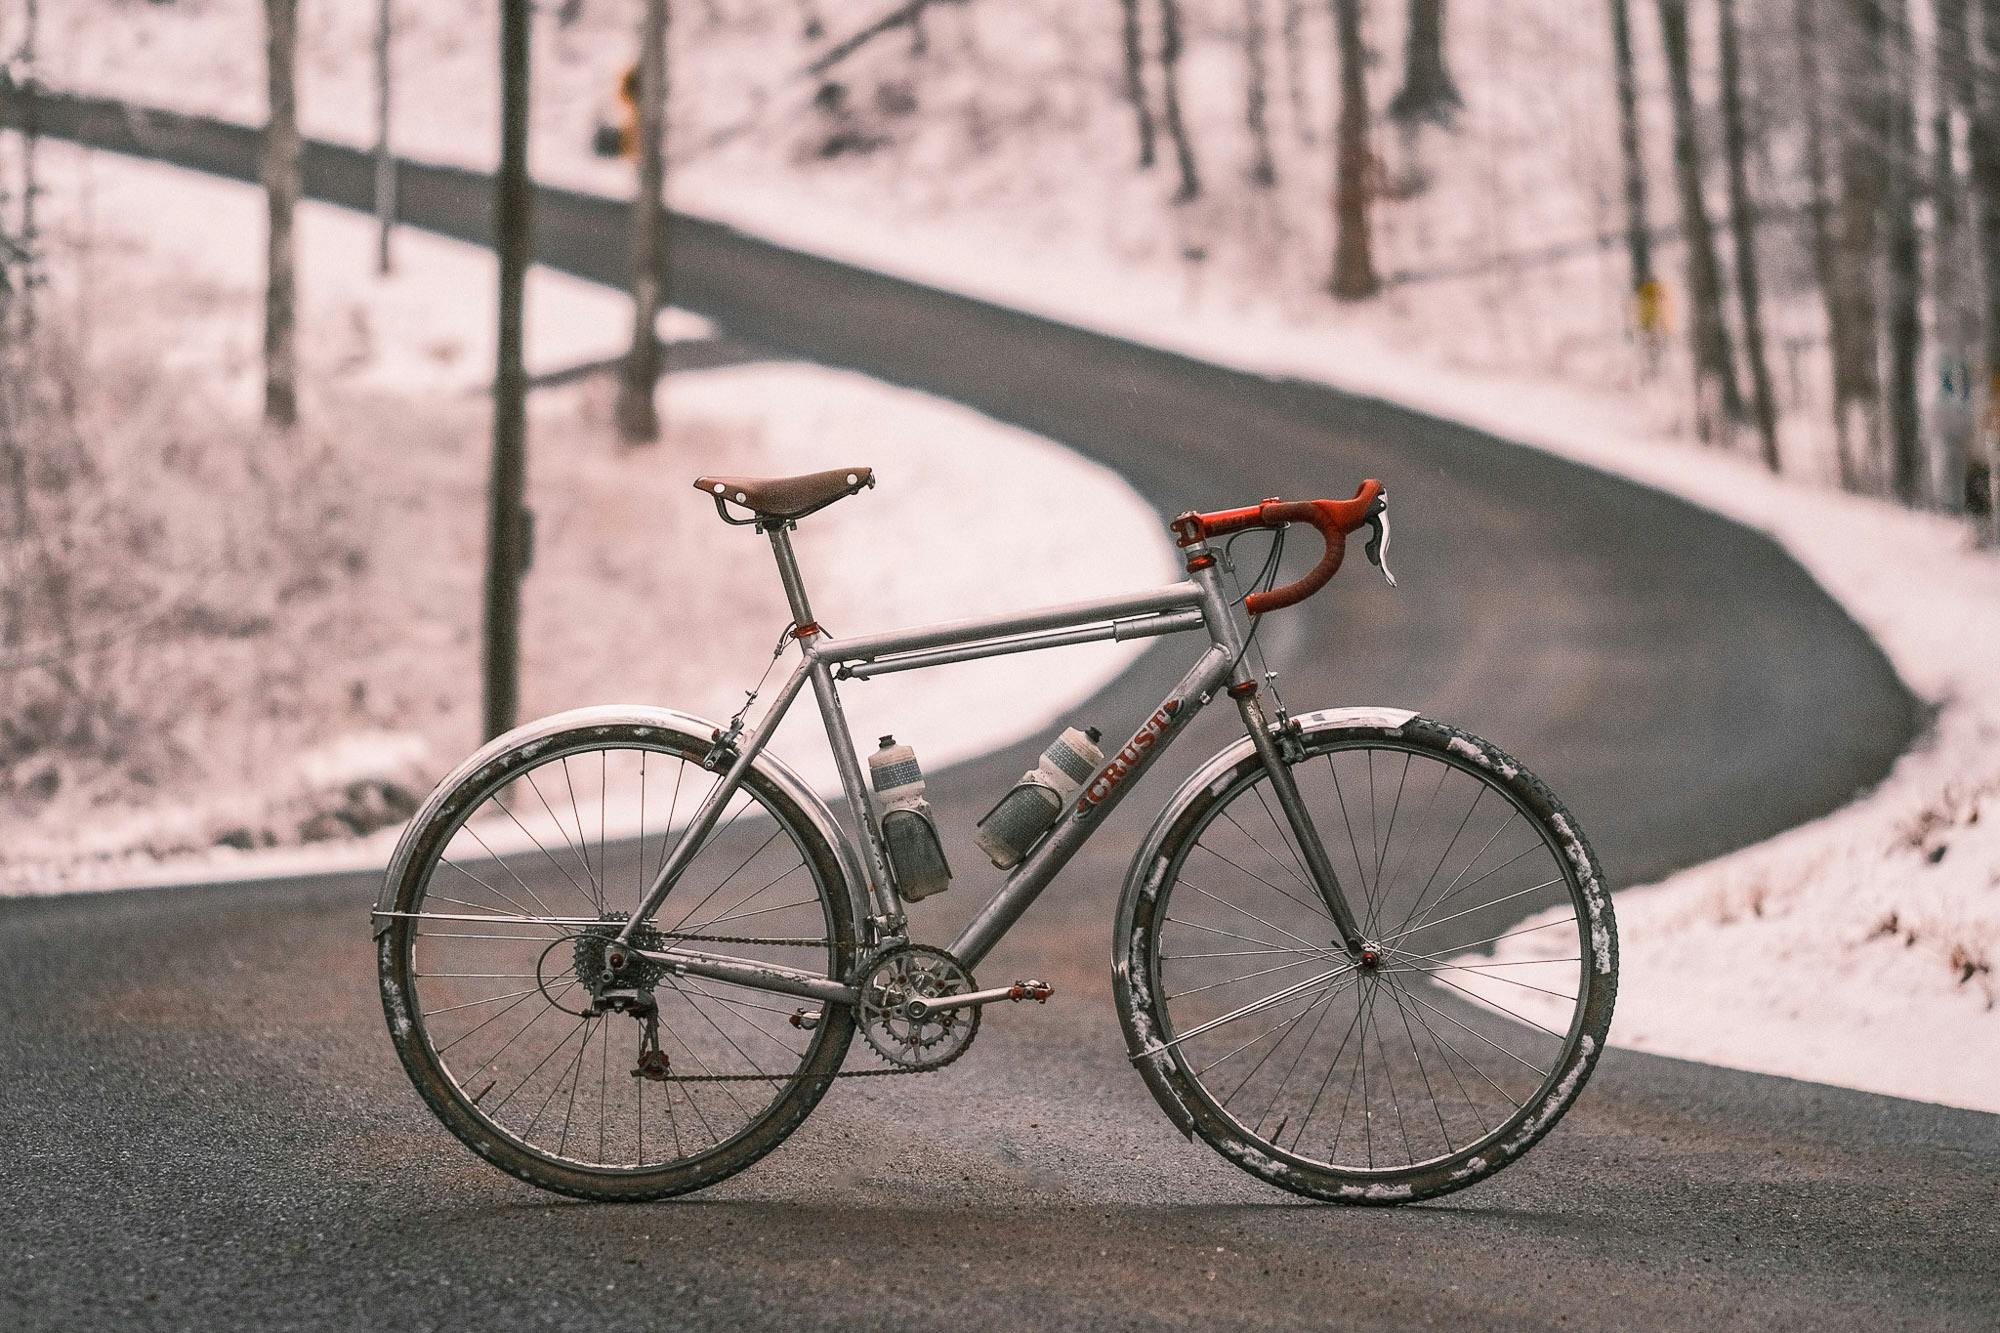 Ronnies Crust bike on a winter road.